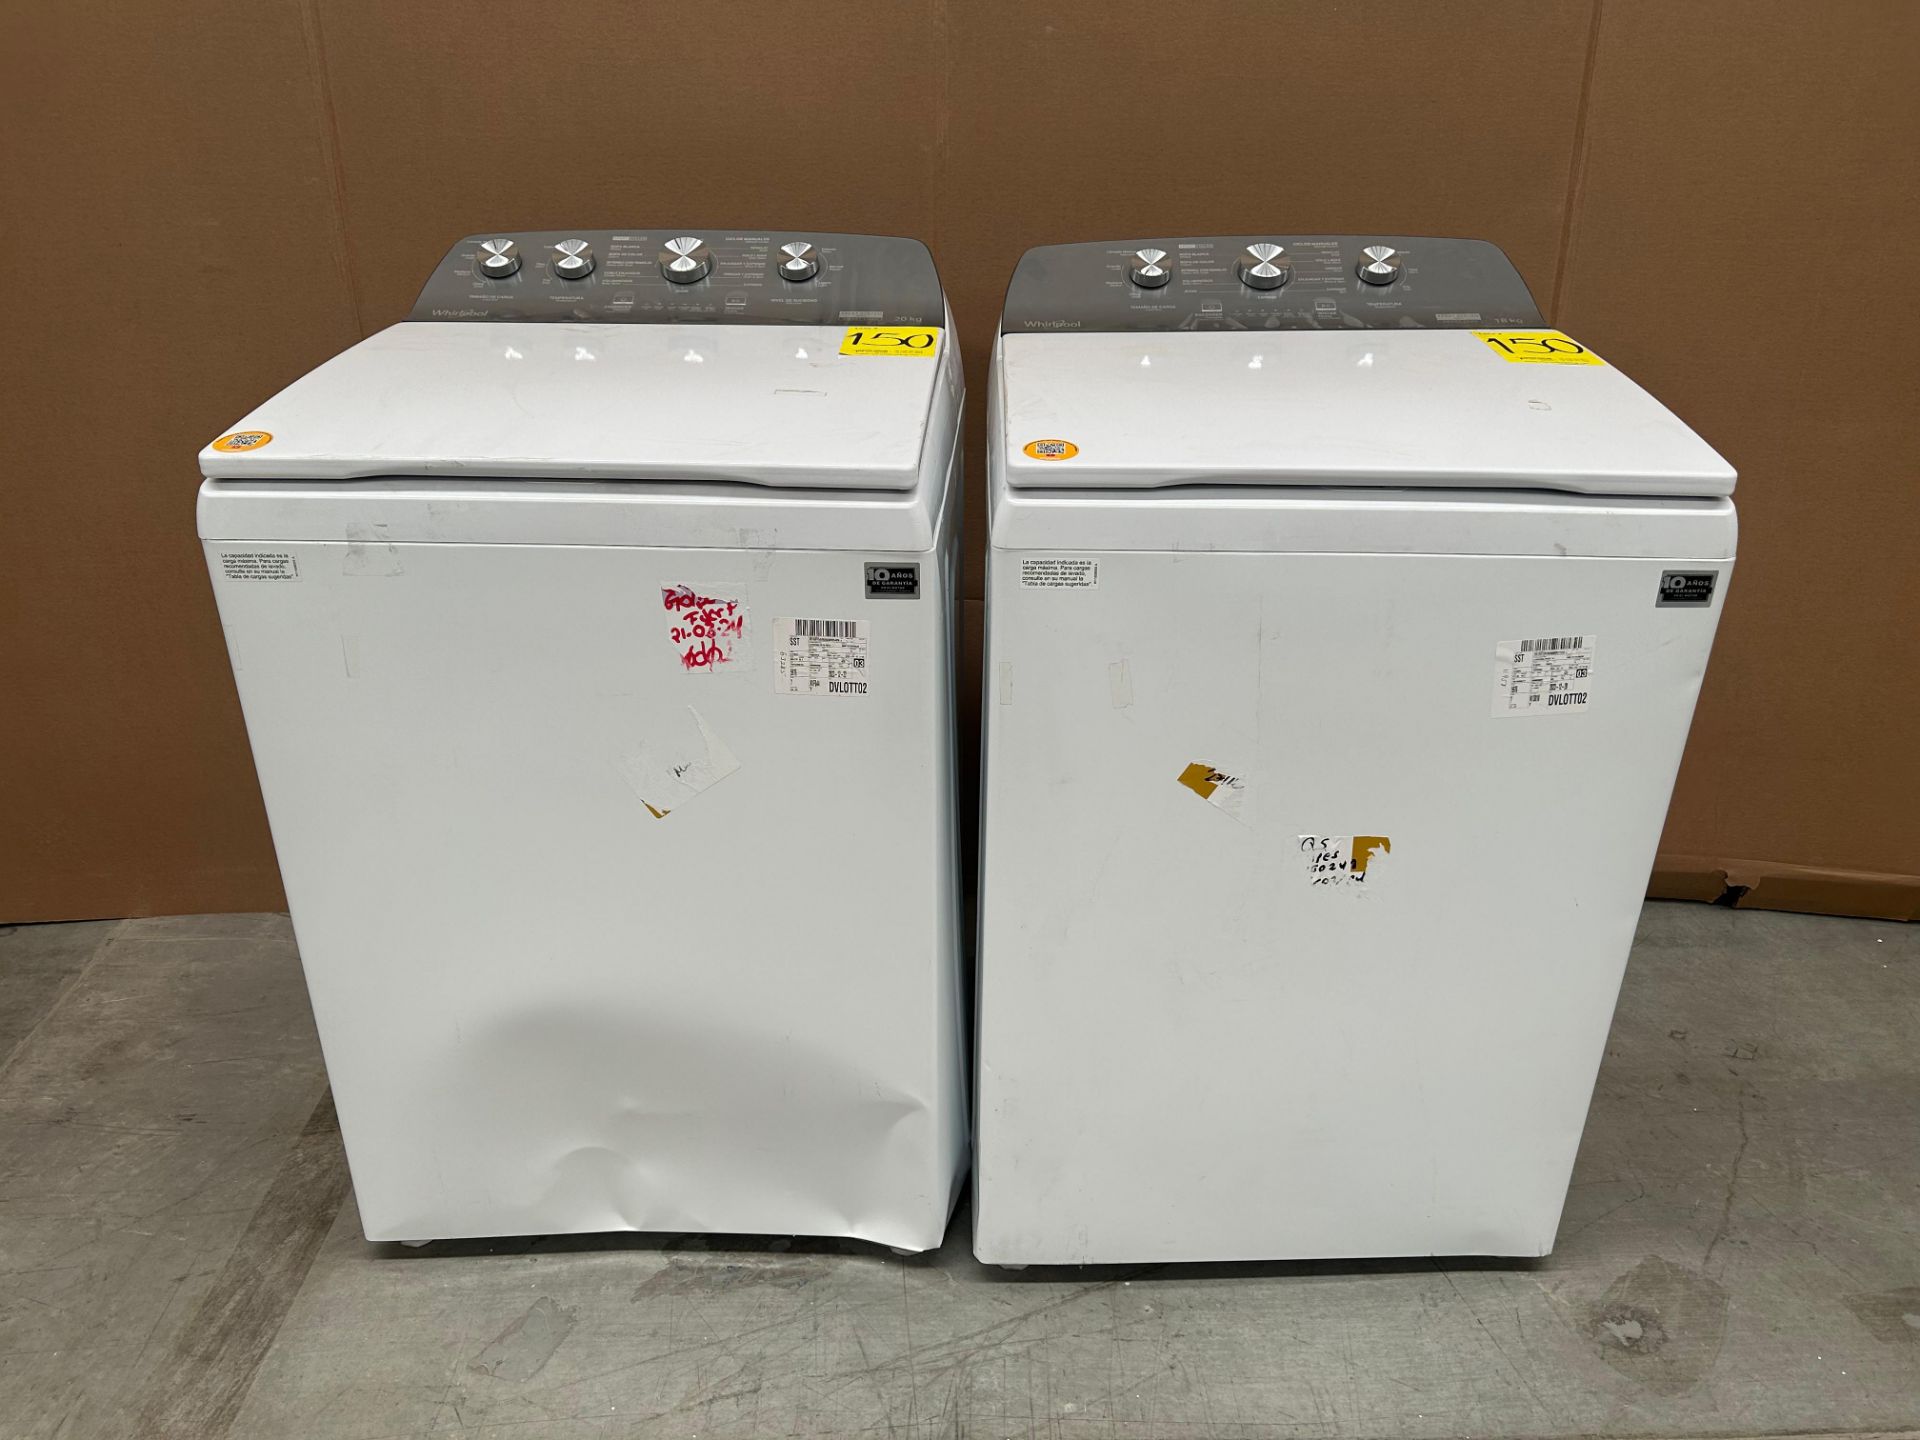 Lote de 2 lavadoras contiene: 1 Lavadora de 20 KG Marca WHIRPOOL, Modelo 8MWTW2024MJM0, Serie 13978